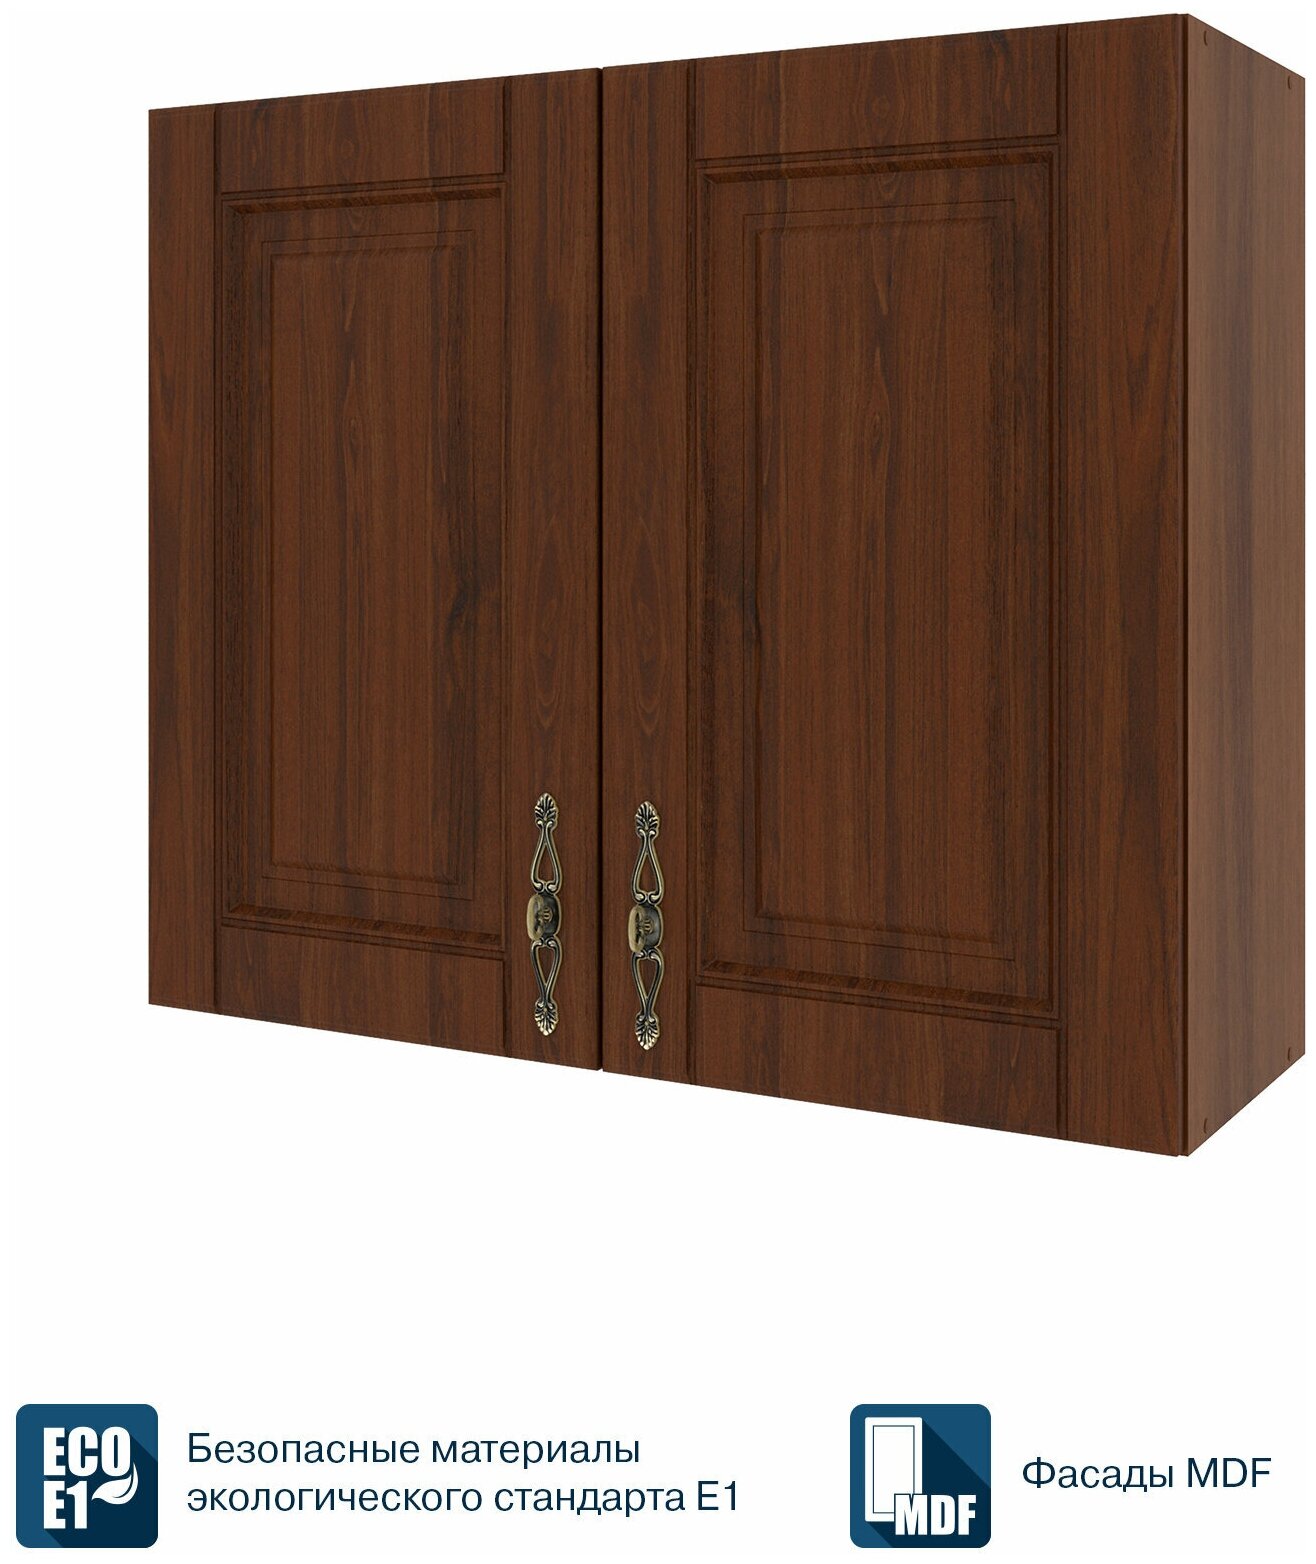 Кухонный модуль навесной шкаф Beneli орех, 80 см, Орех, фасады МДФ, 80х29х67,59см, 1шт. - фотография № 4